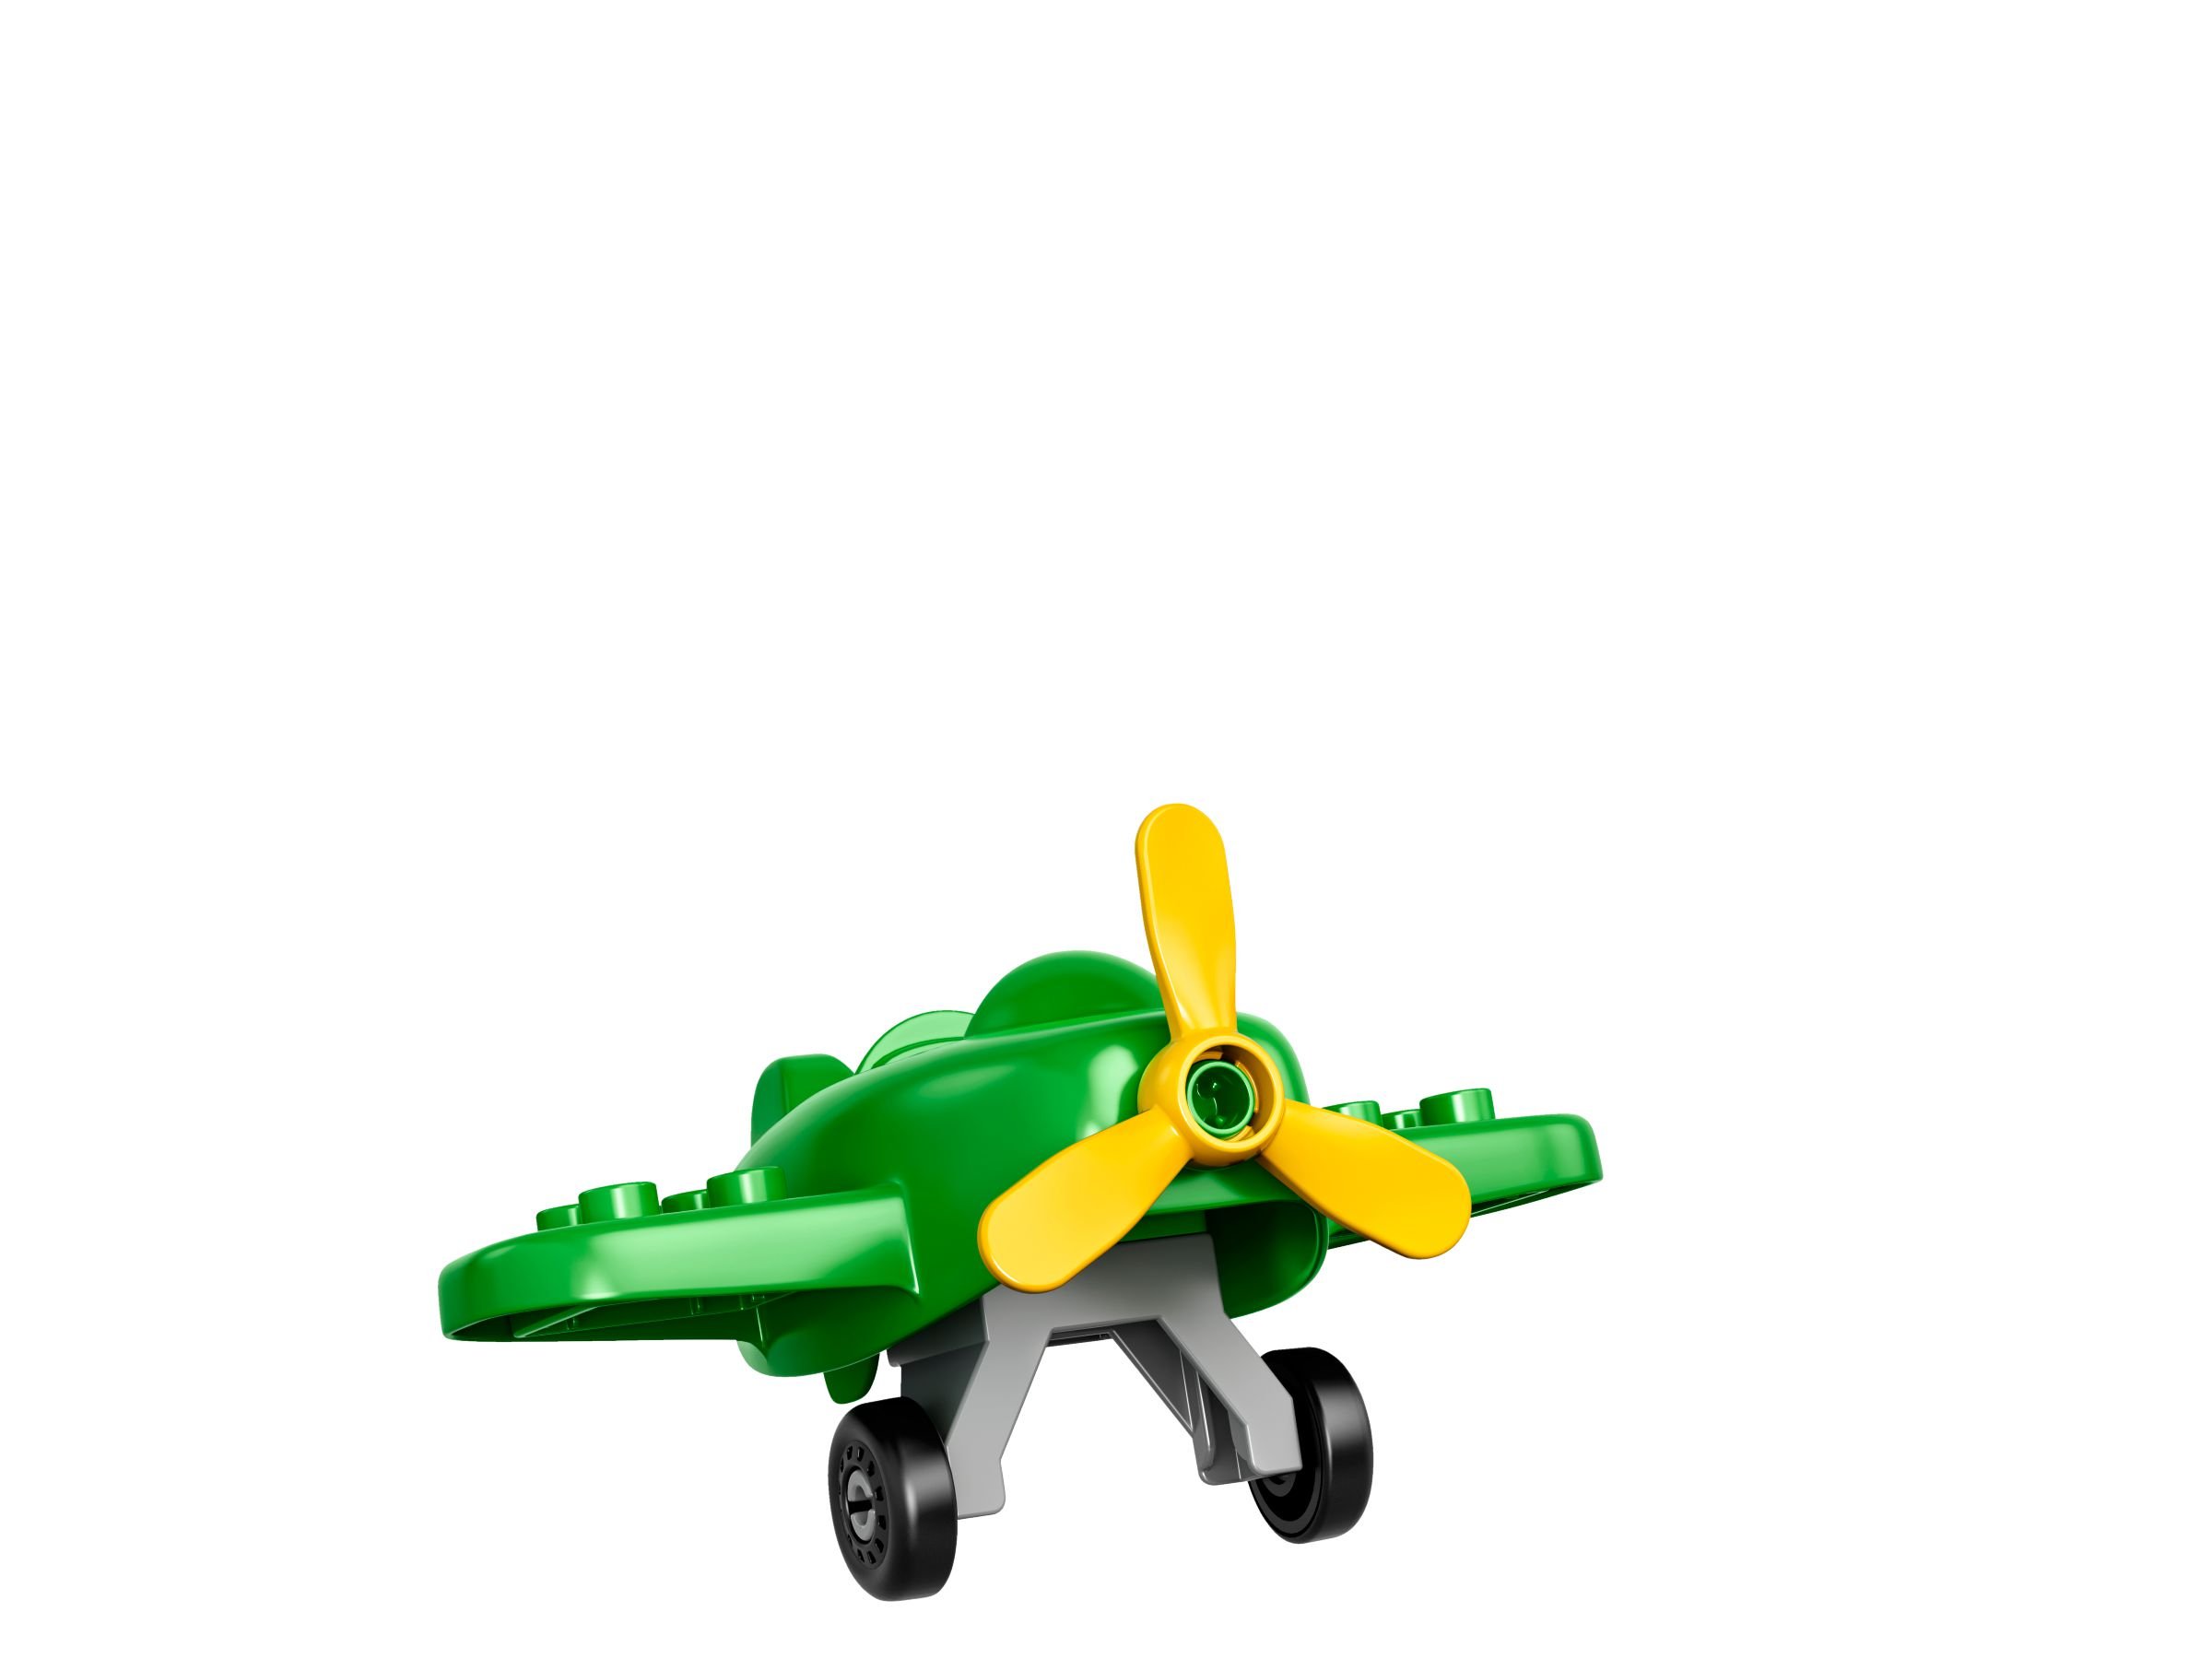 LEGO Duplo 10808 Kleines Flugzeug LEGO_10808_alt4.jpg